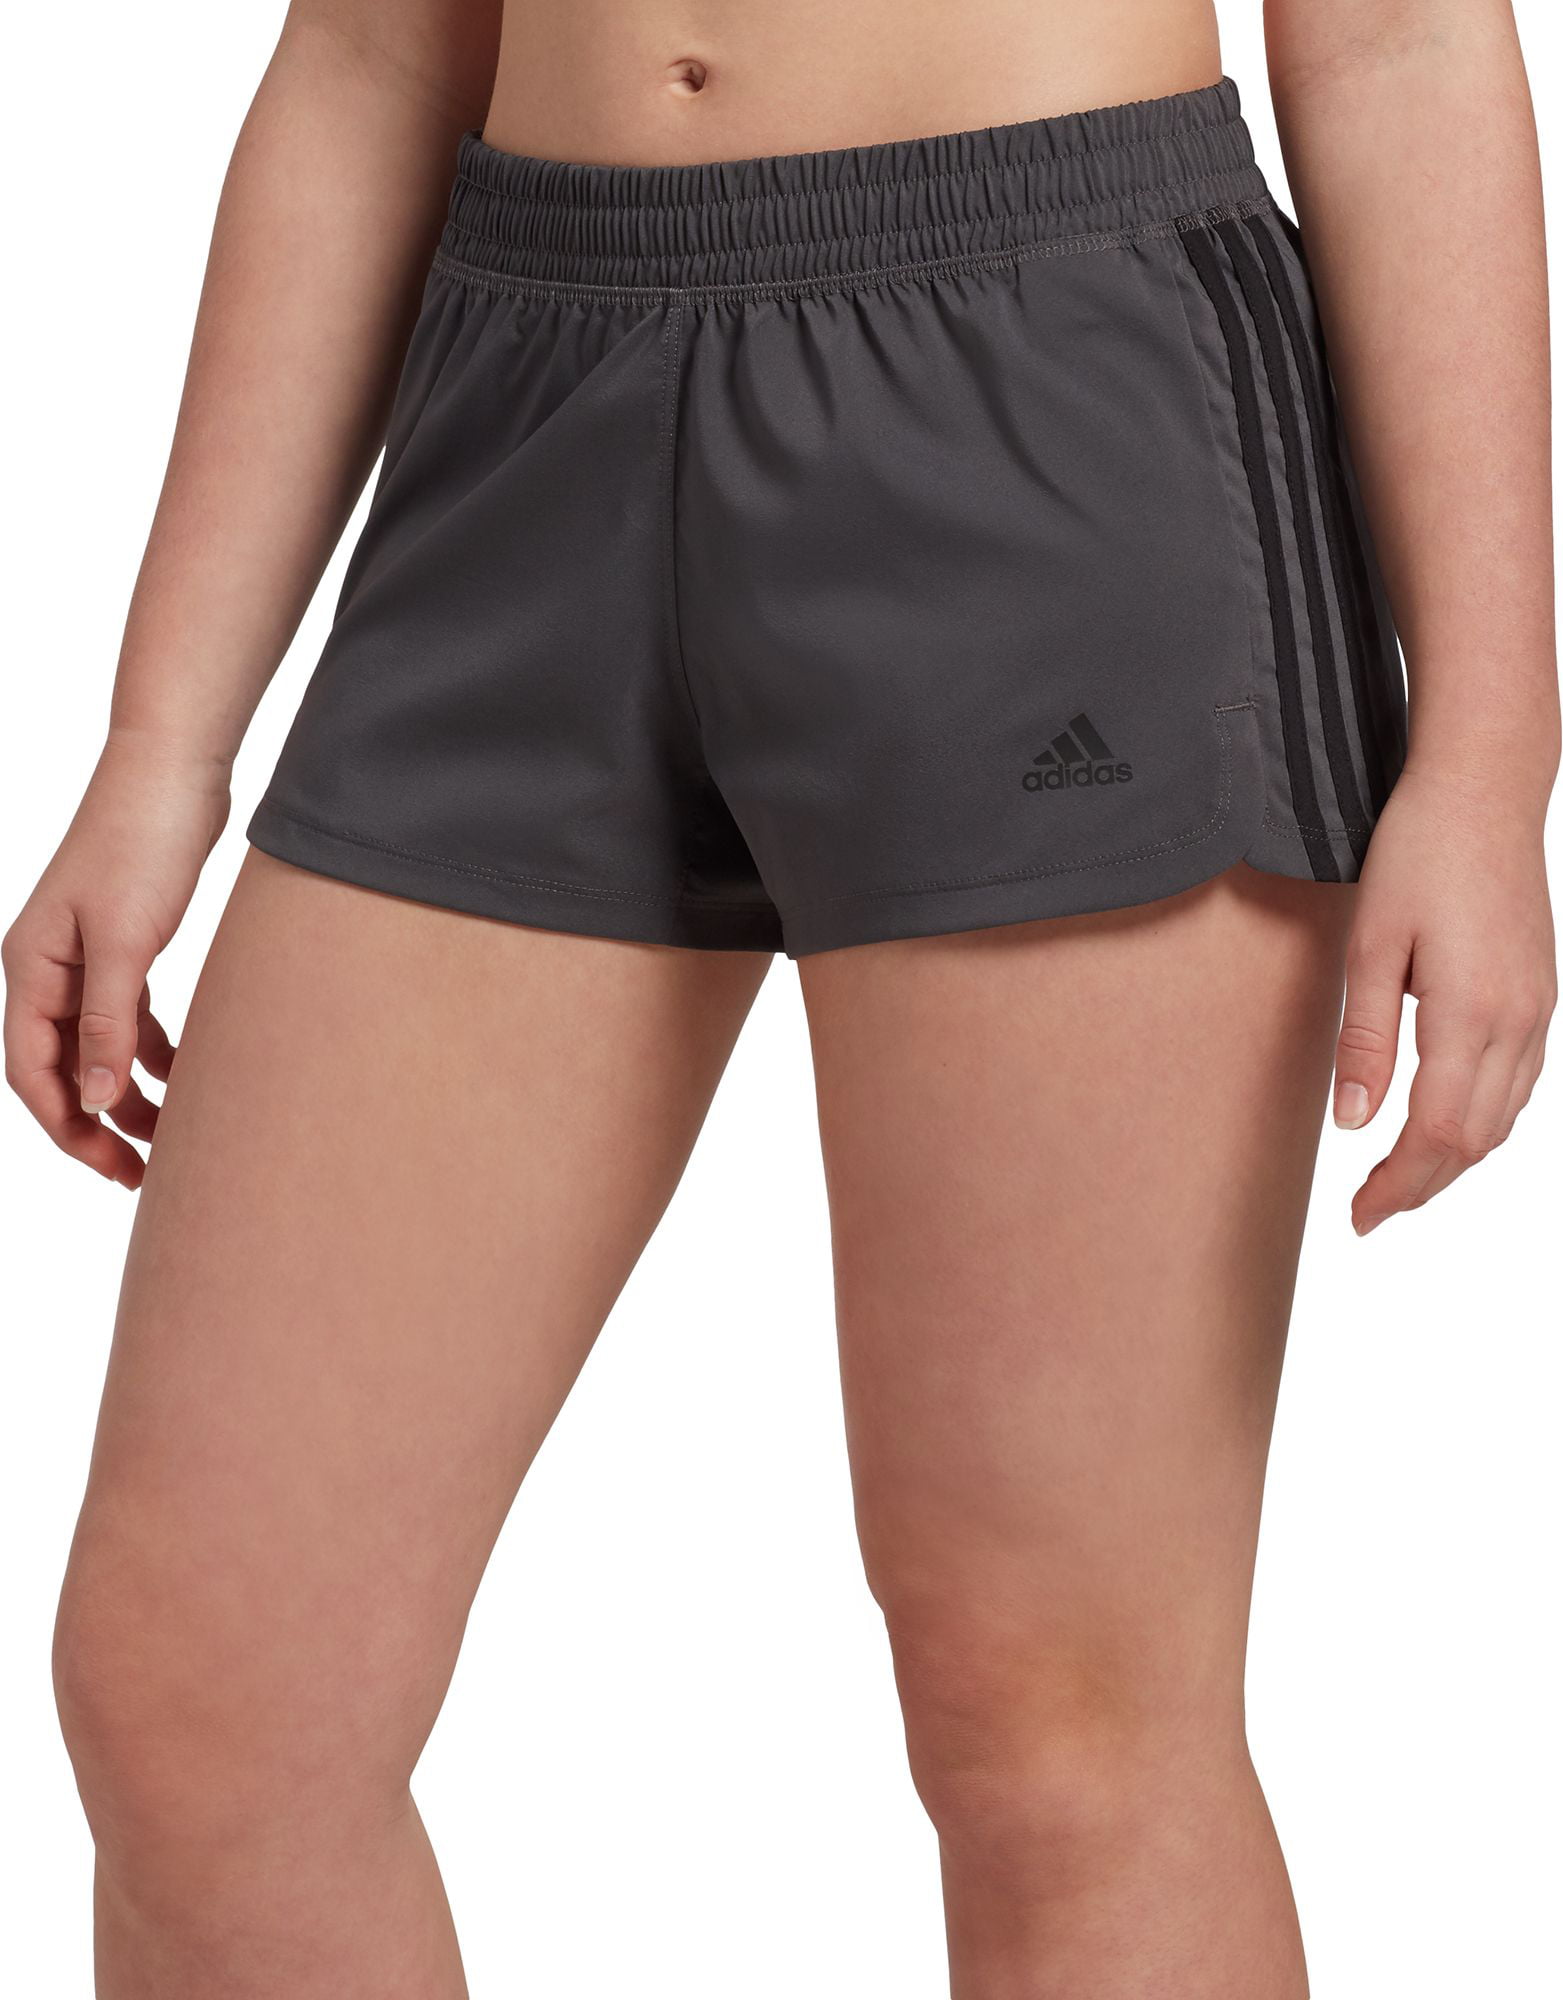 Adidas - adidas Women's Pacer 3-Stripes Woven Shorts - Walmart.com